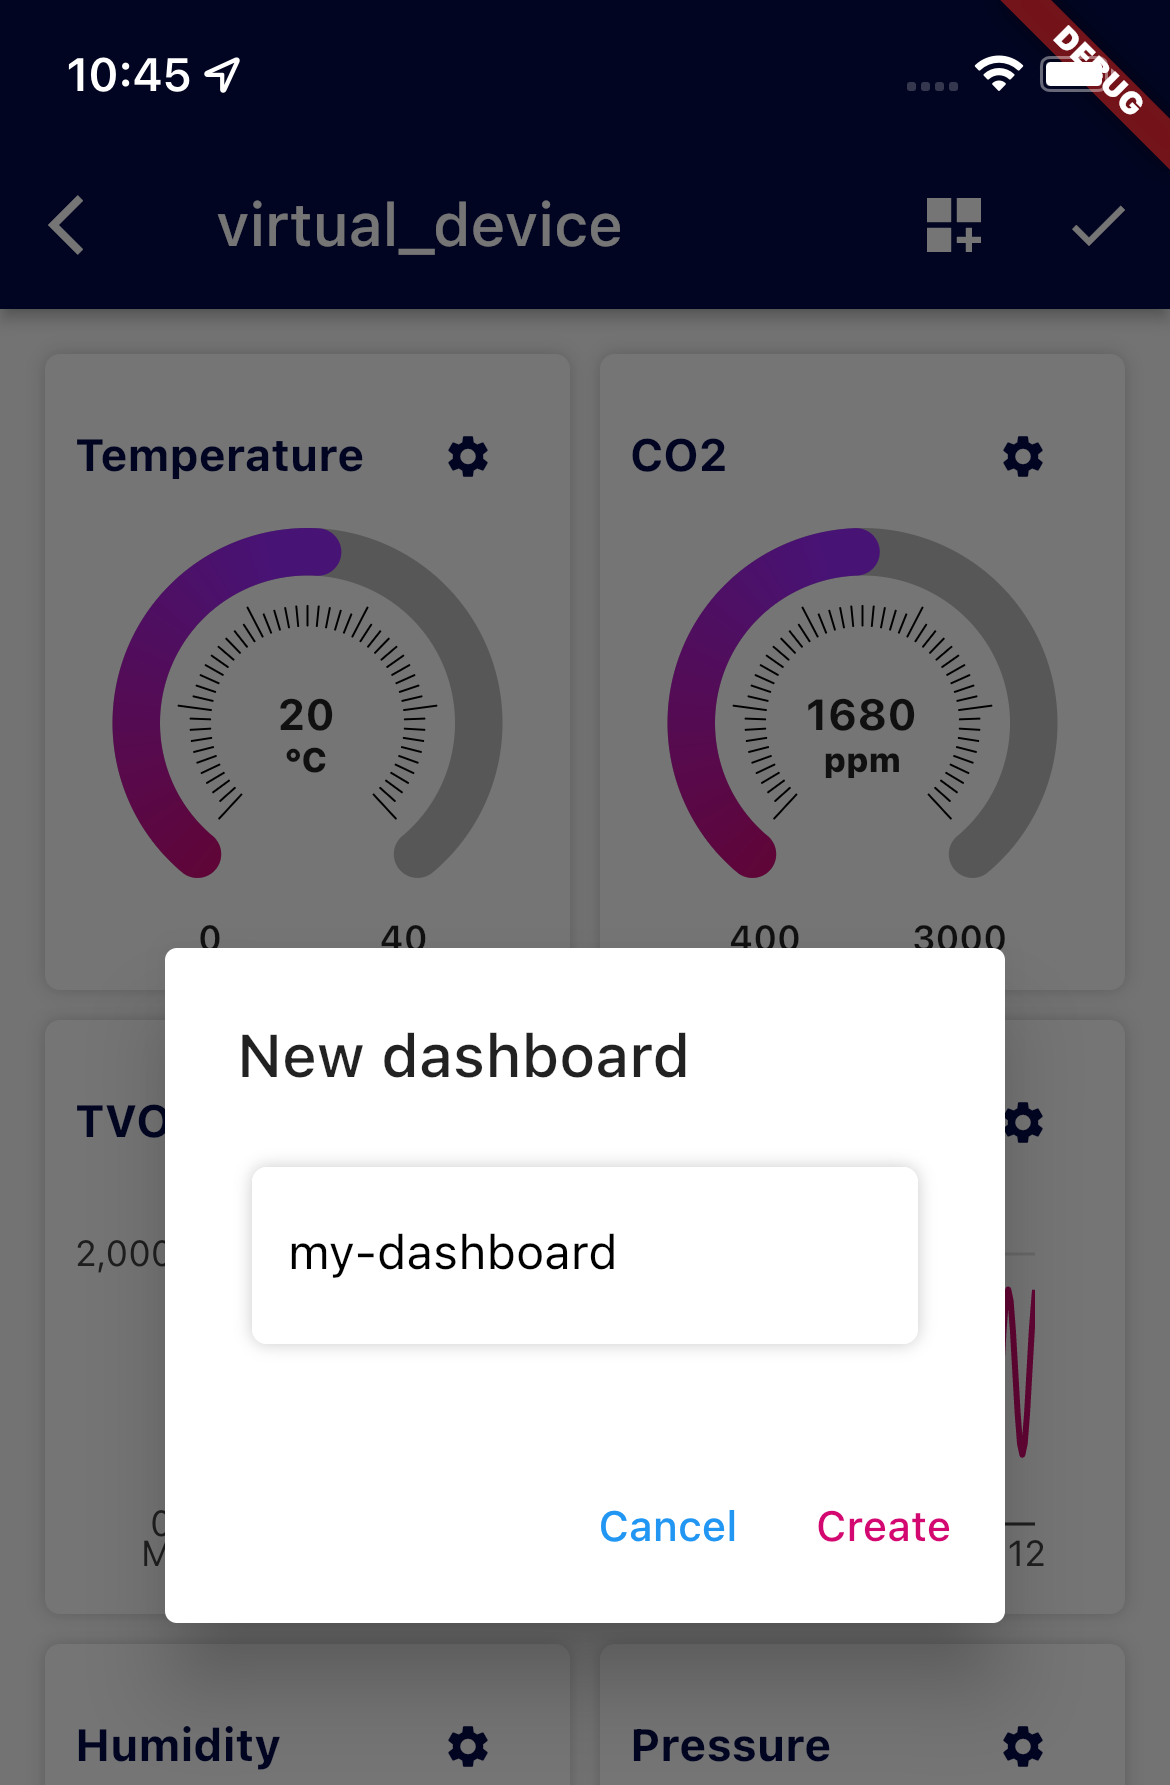 device-dashboard-new-dashboard.png